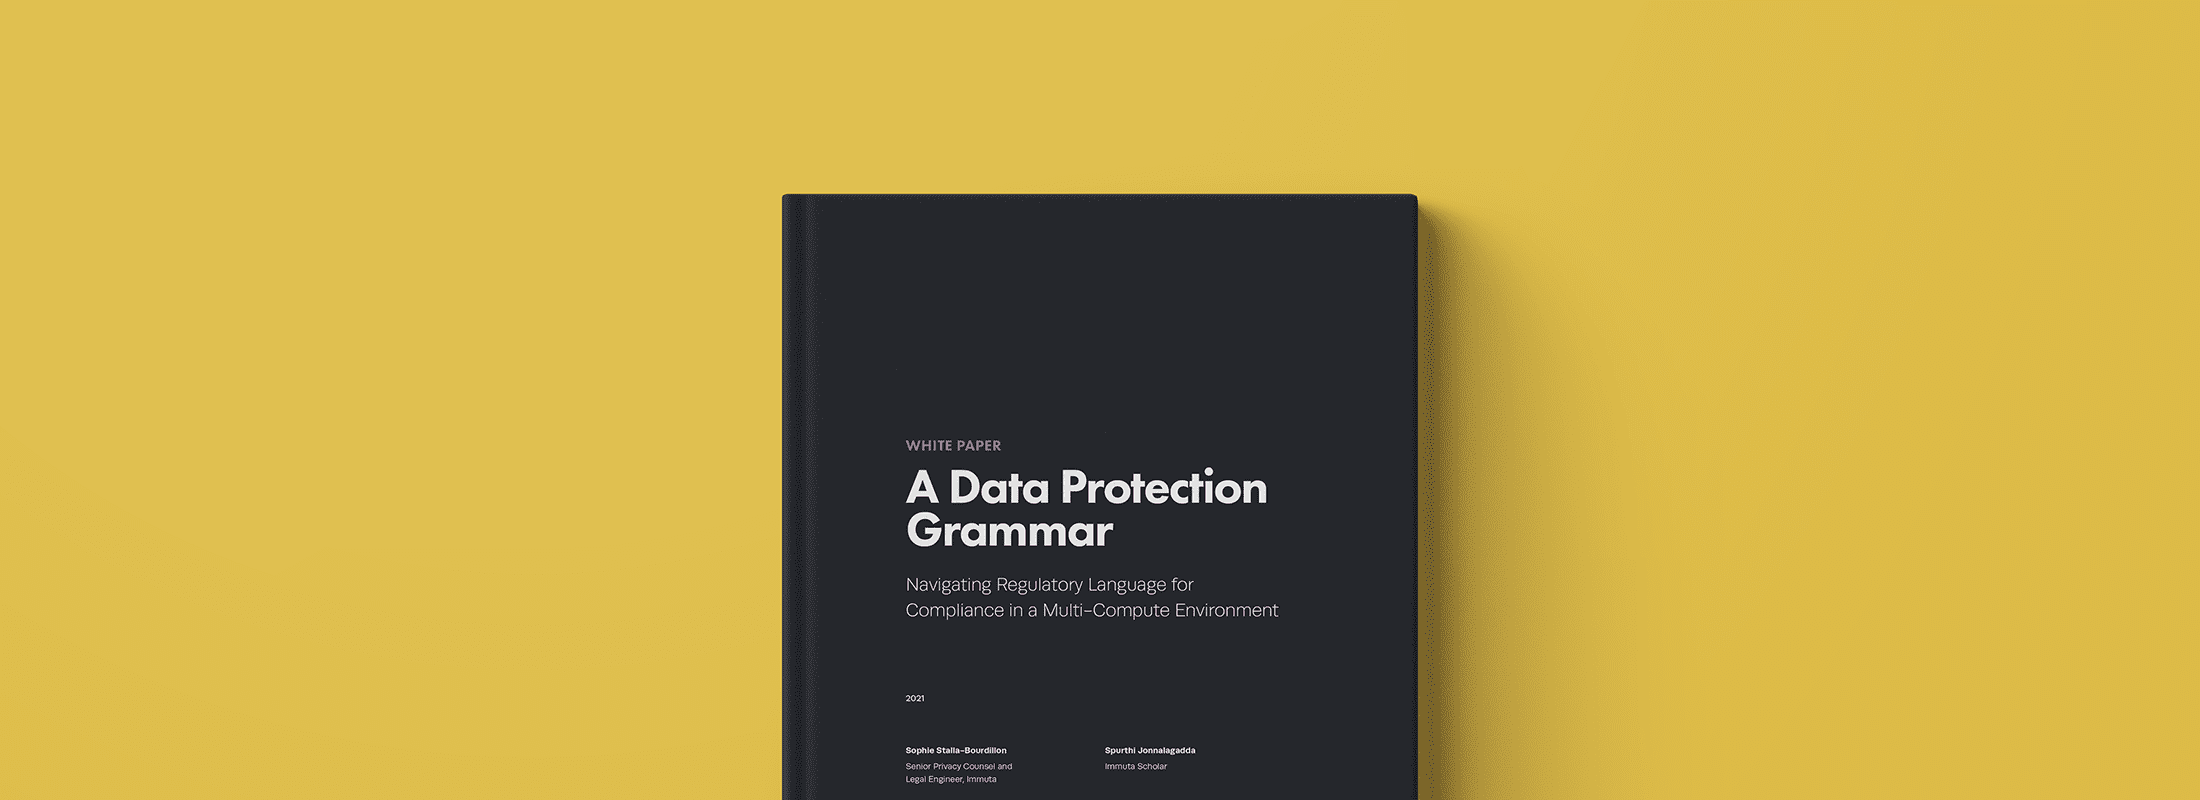 A Data Protection Grammar